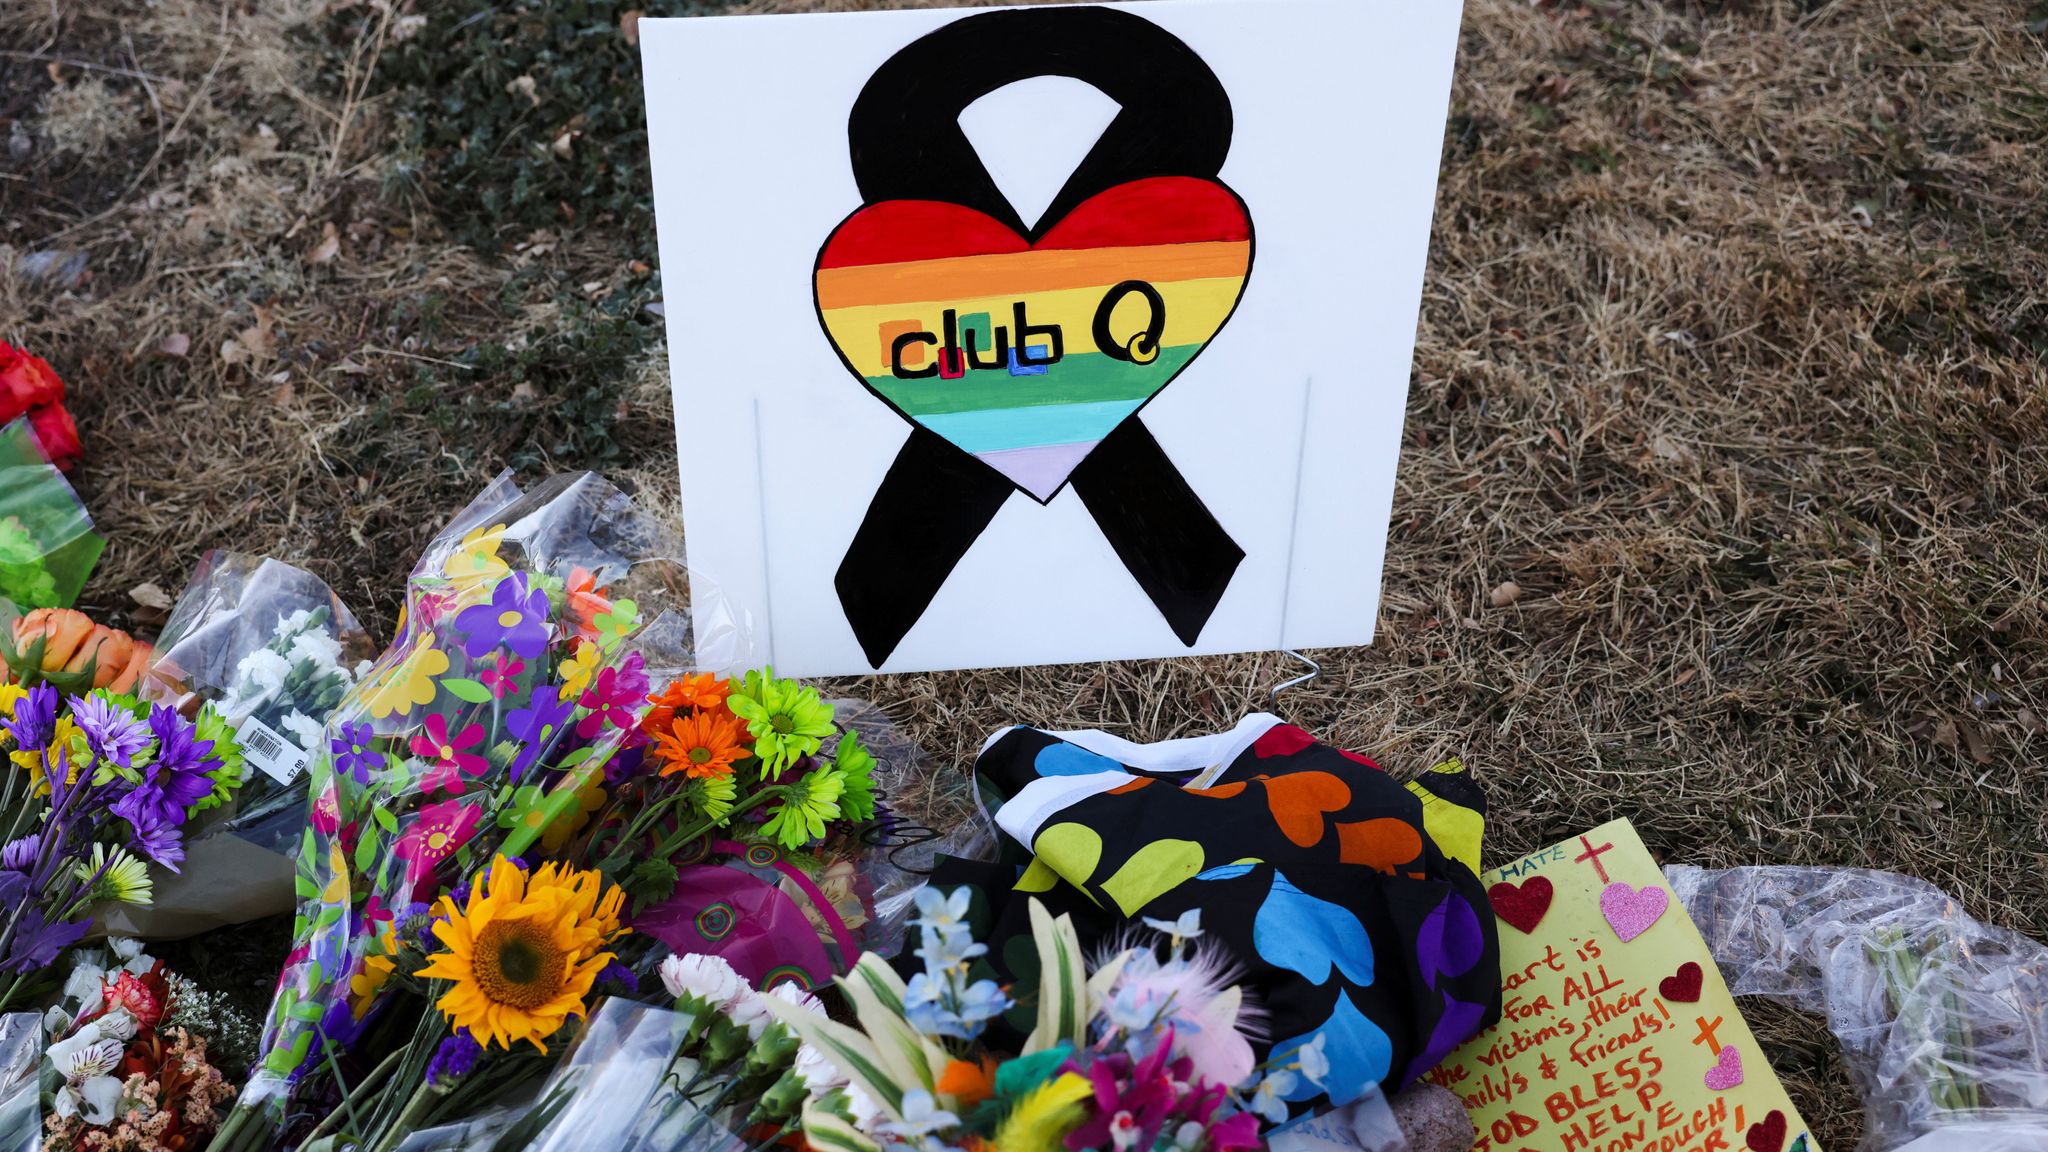 Colorado gay club shooting suspect identifies as non-binary, lawyers say |  US News | Sky News